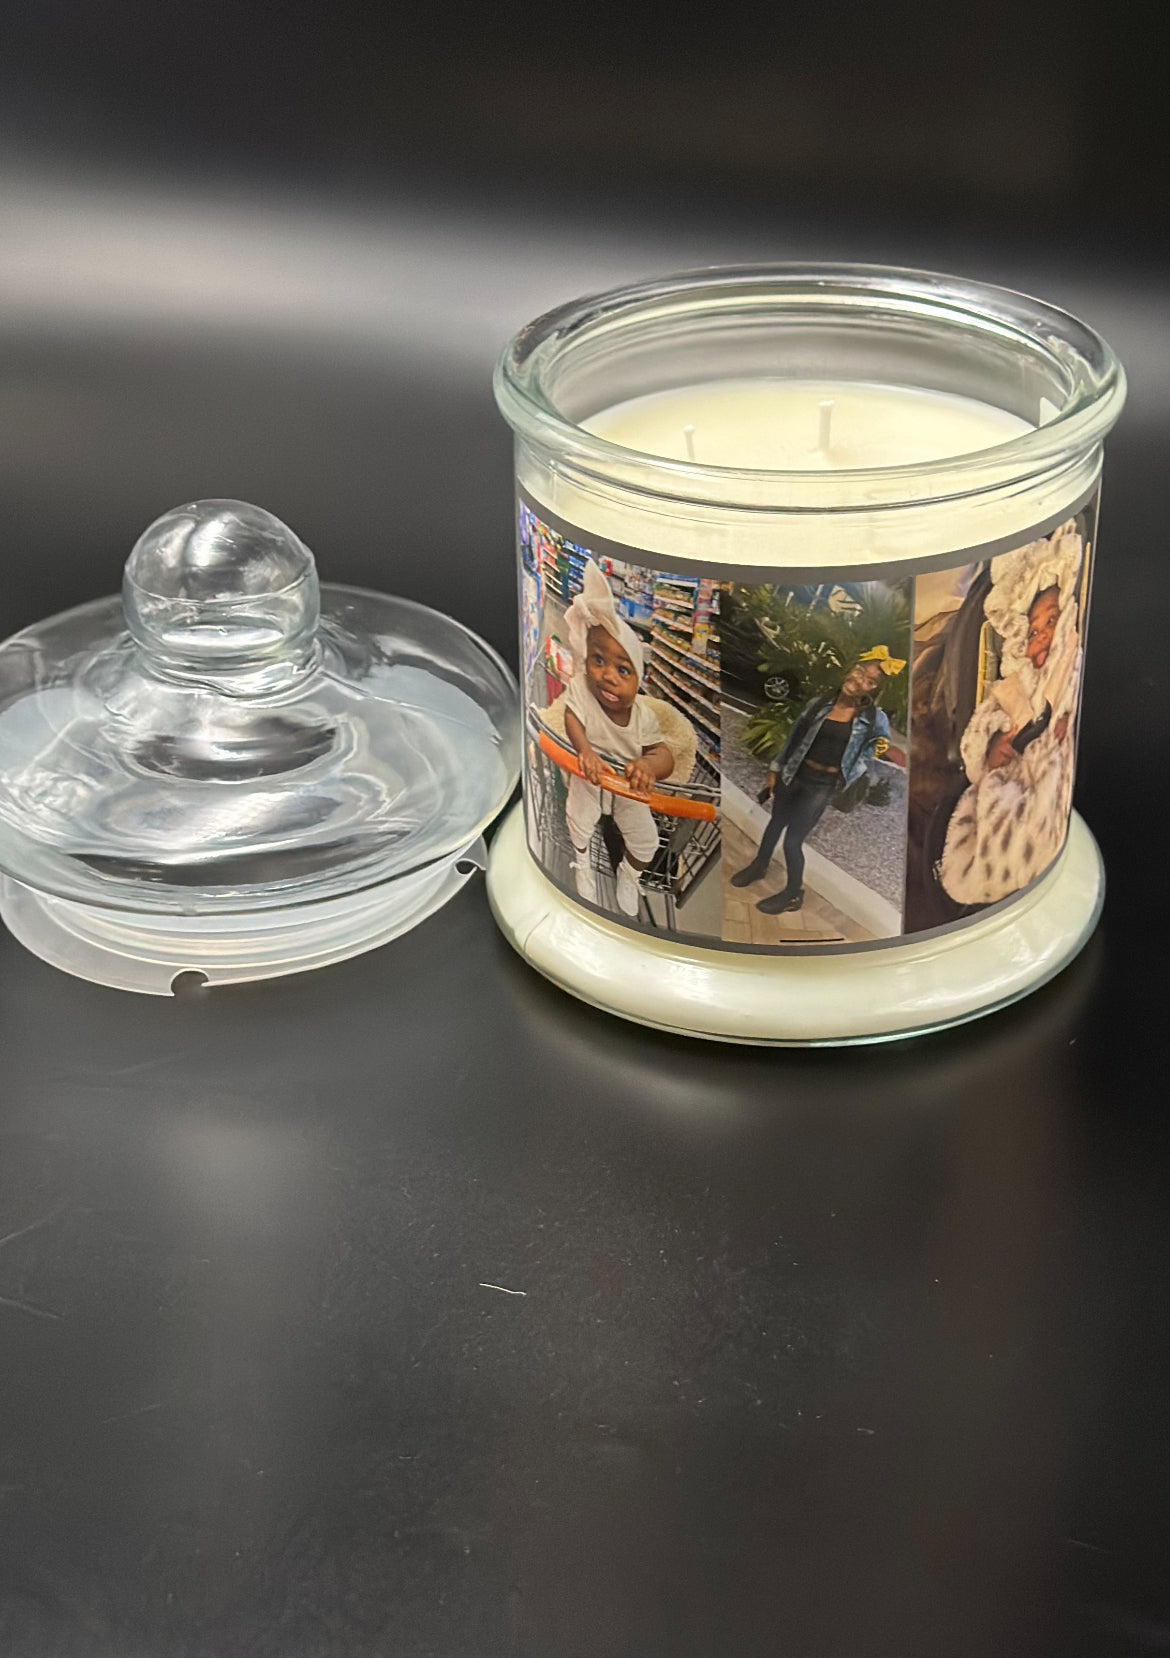 Customized candle